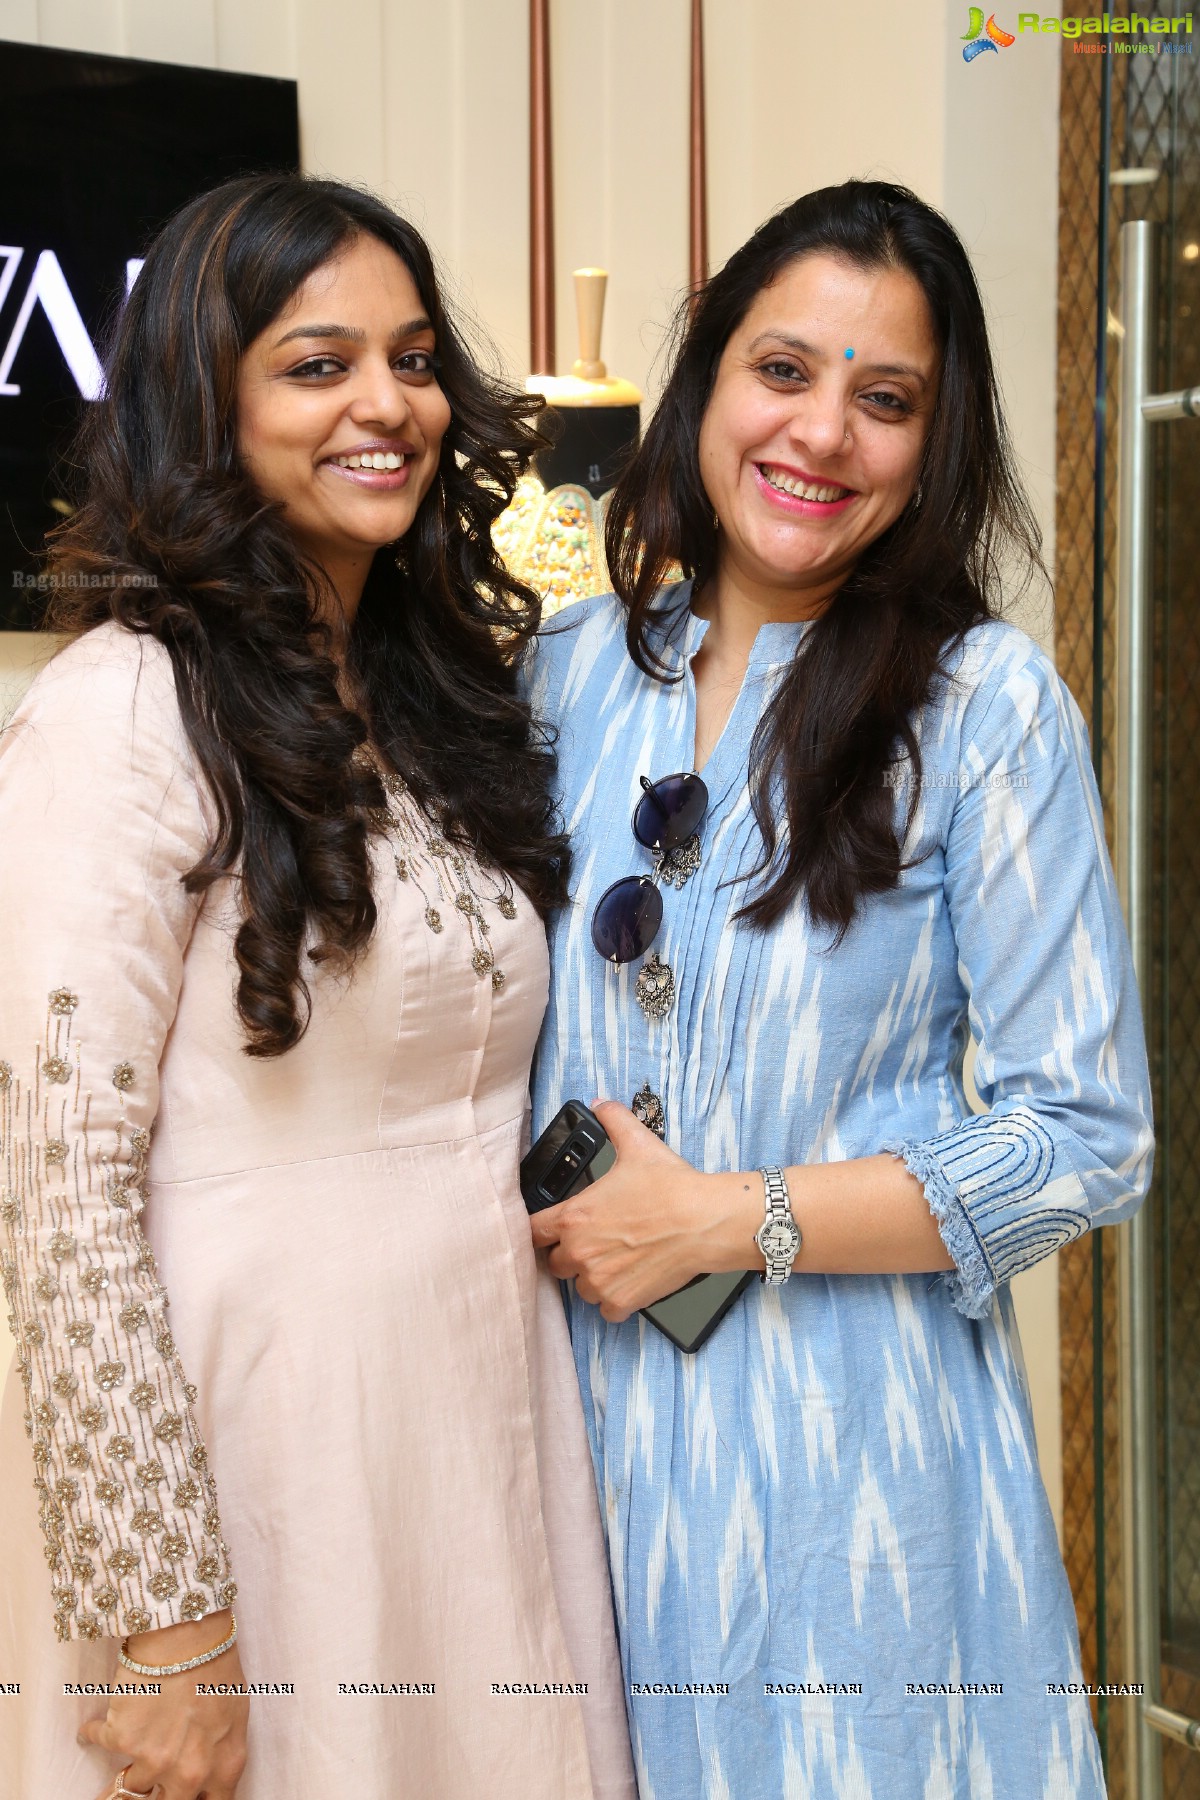 Kavita Agarwal Designer Showroom Launch